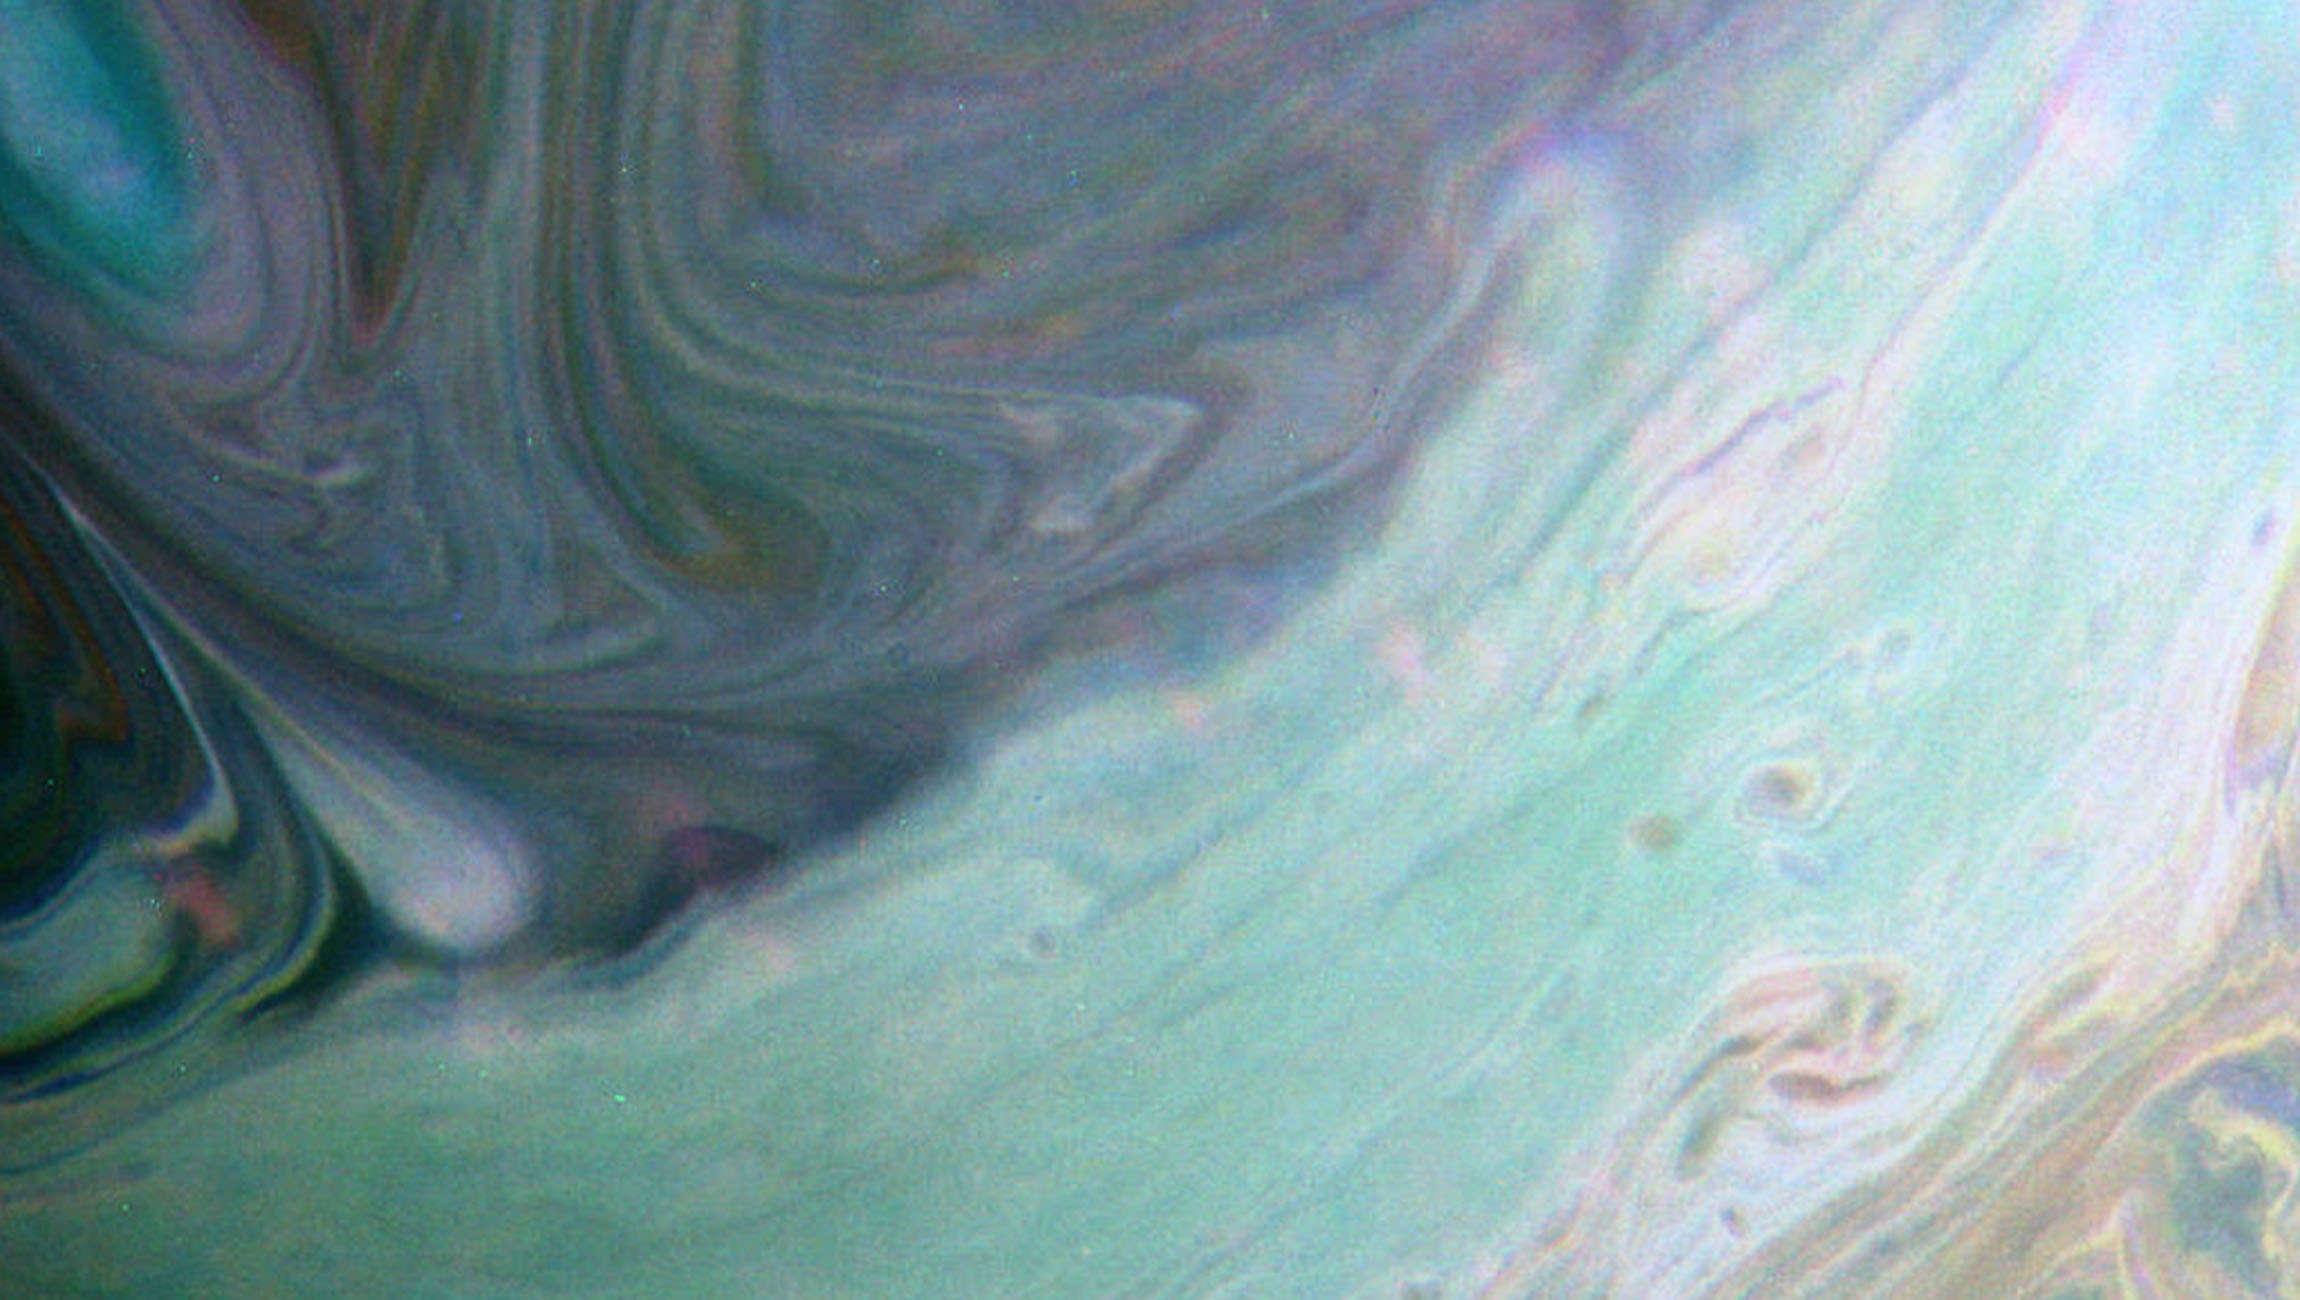 NASA image of Saturn's clouds